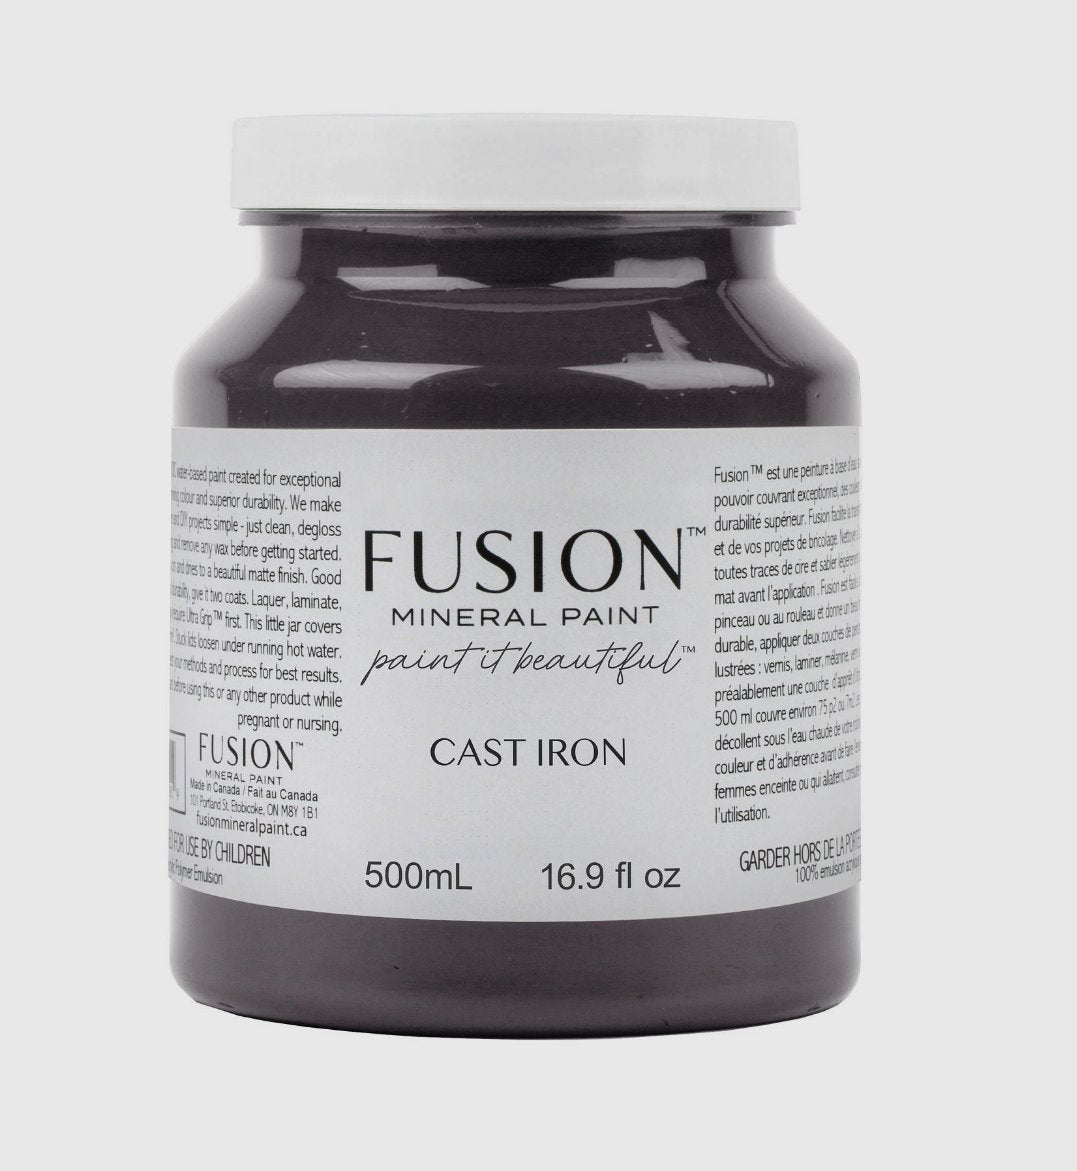 Fusion mineral paint cast iron 500ml jar